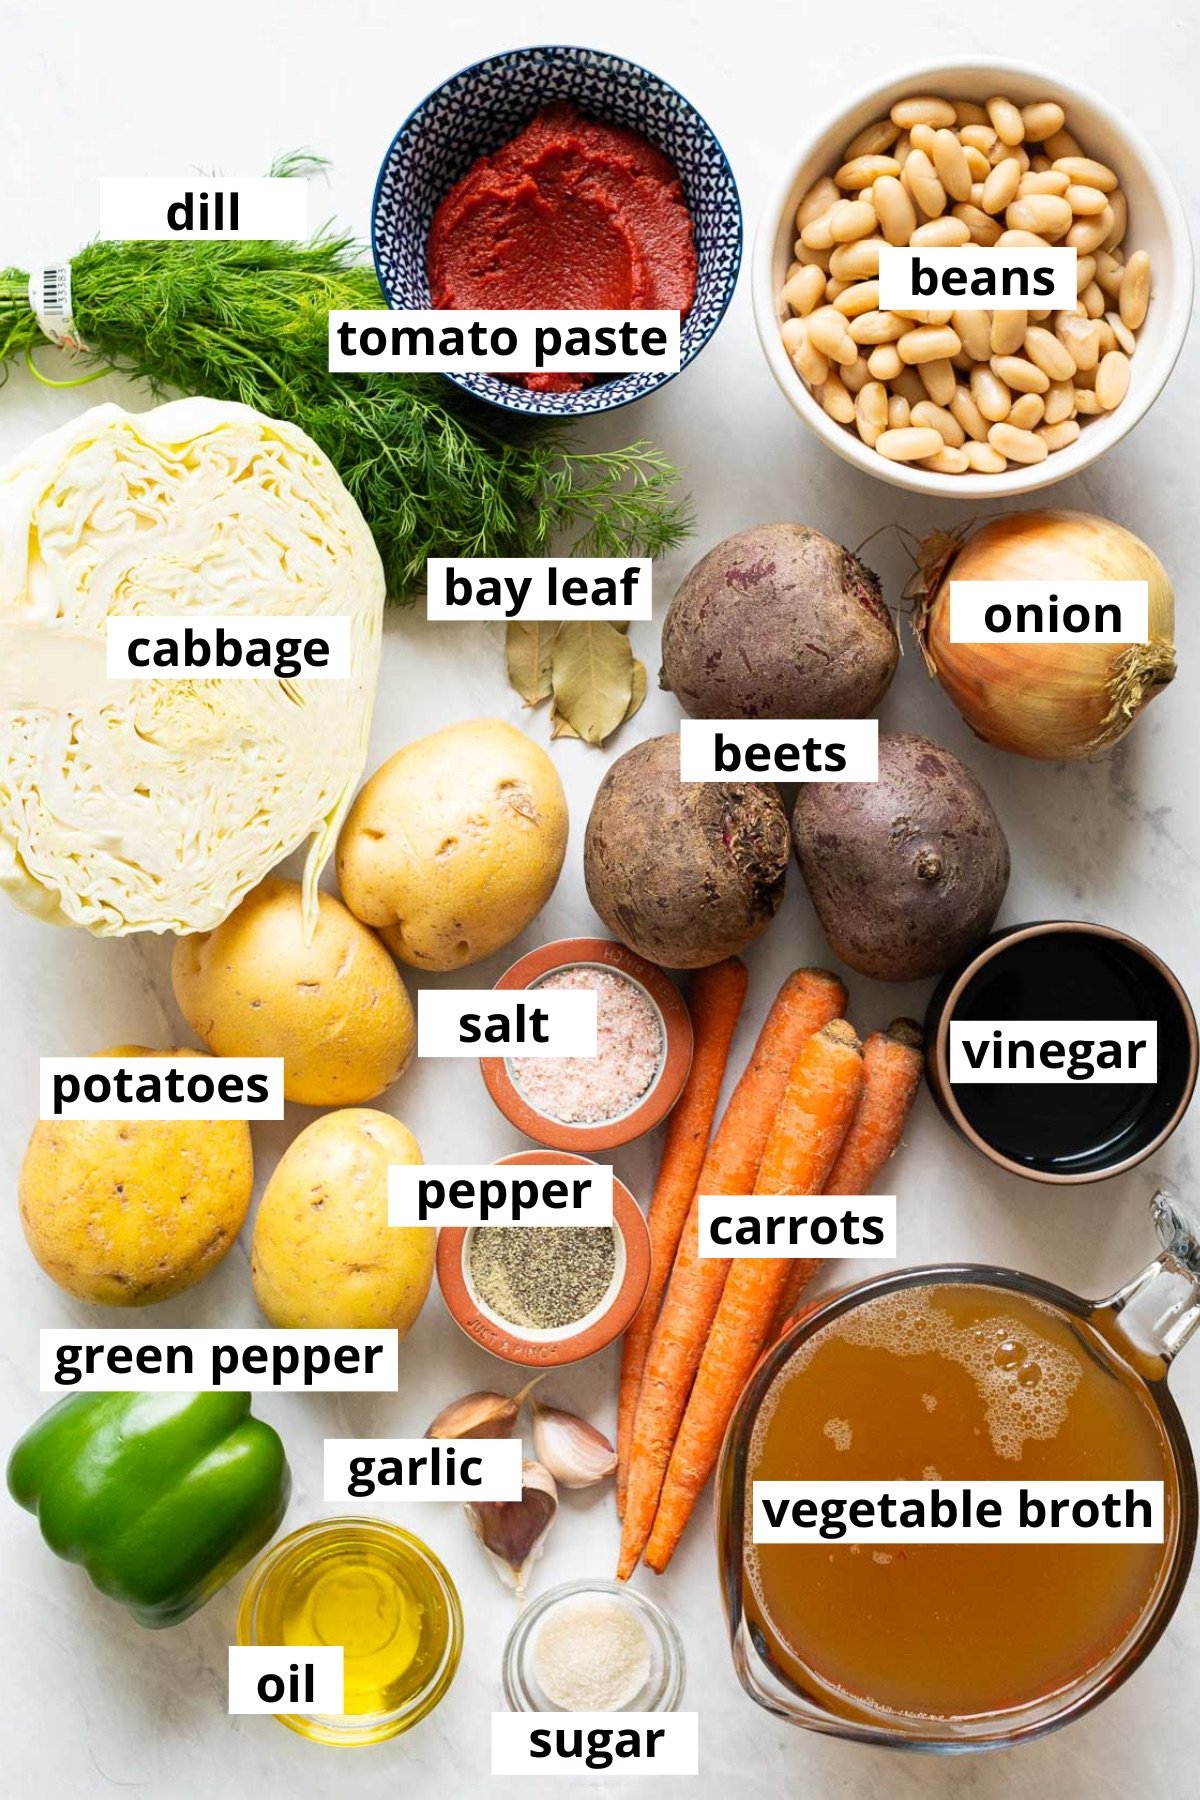 White beans, onion, beets, bay leaf, tomato paste, dill, cabbage, potato, carrots, vinegar, salt, pepper, green pepper, garlic, oil, sugar, vegetable broth.